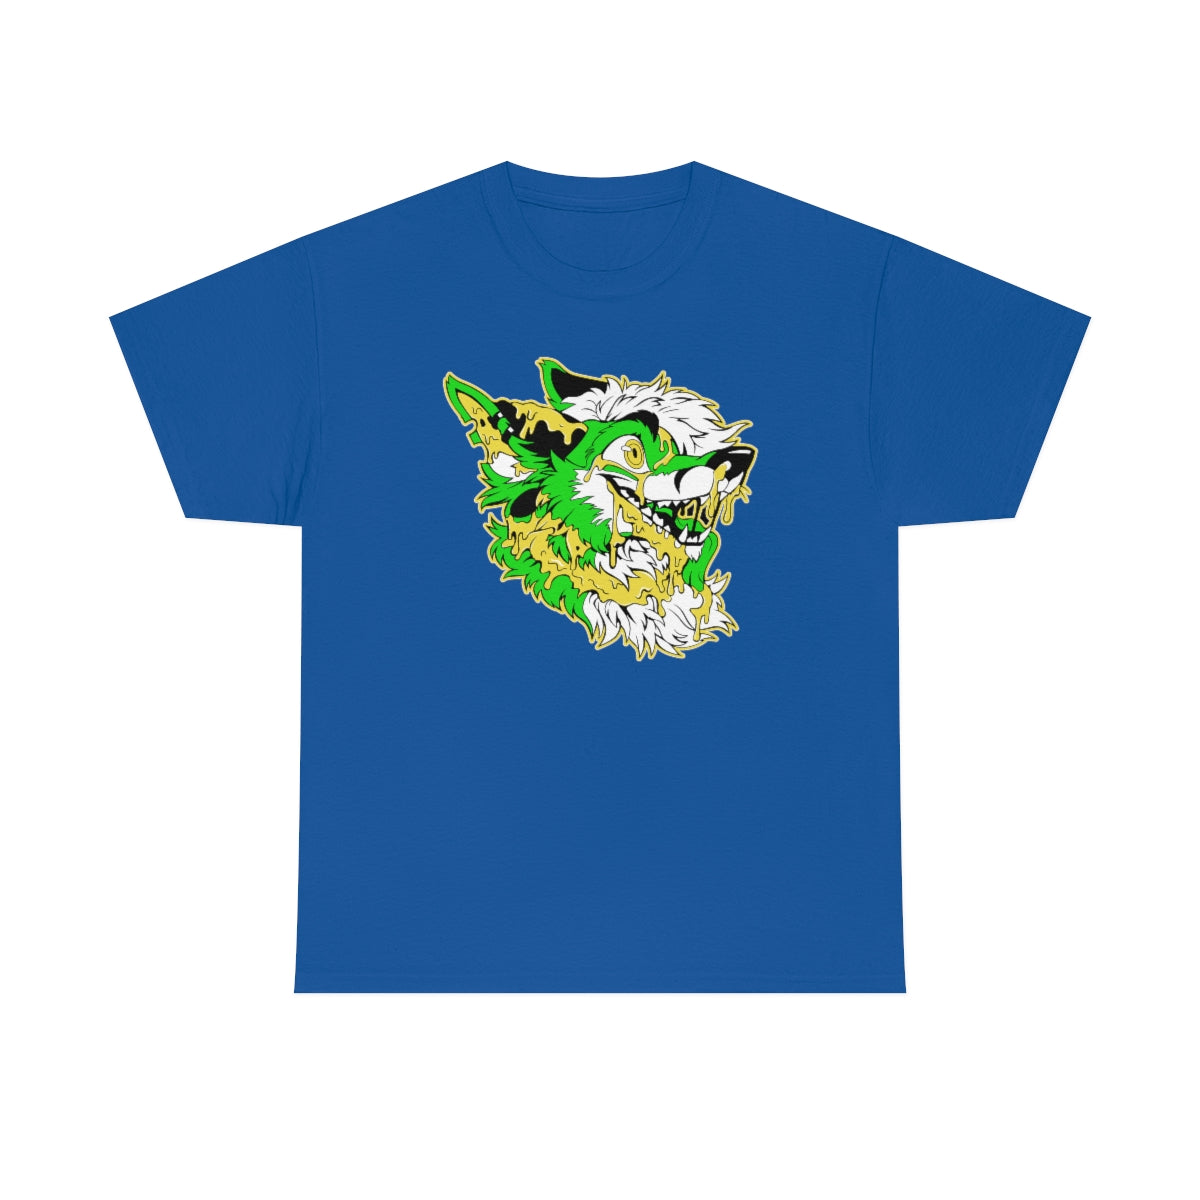 Green and Yellow - T-Shirt T-Shirt Artworktee Royal Blue S 